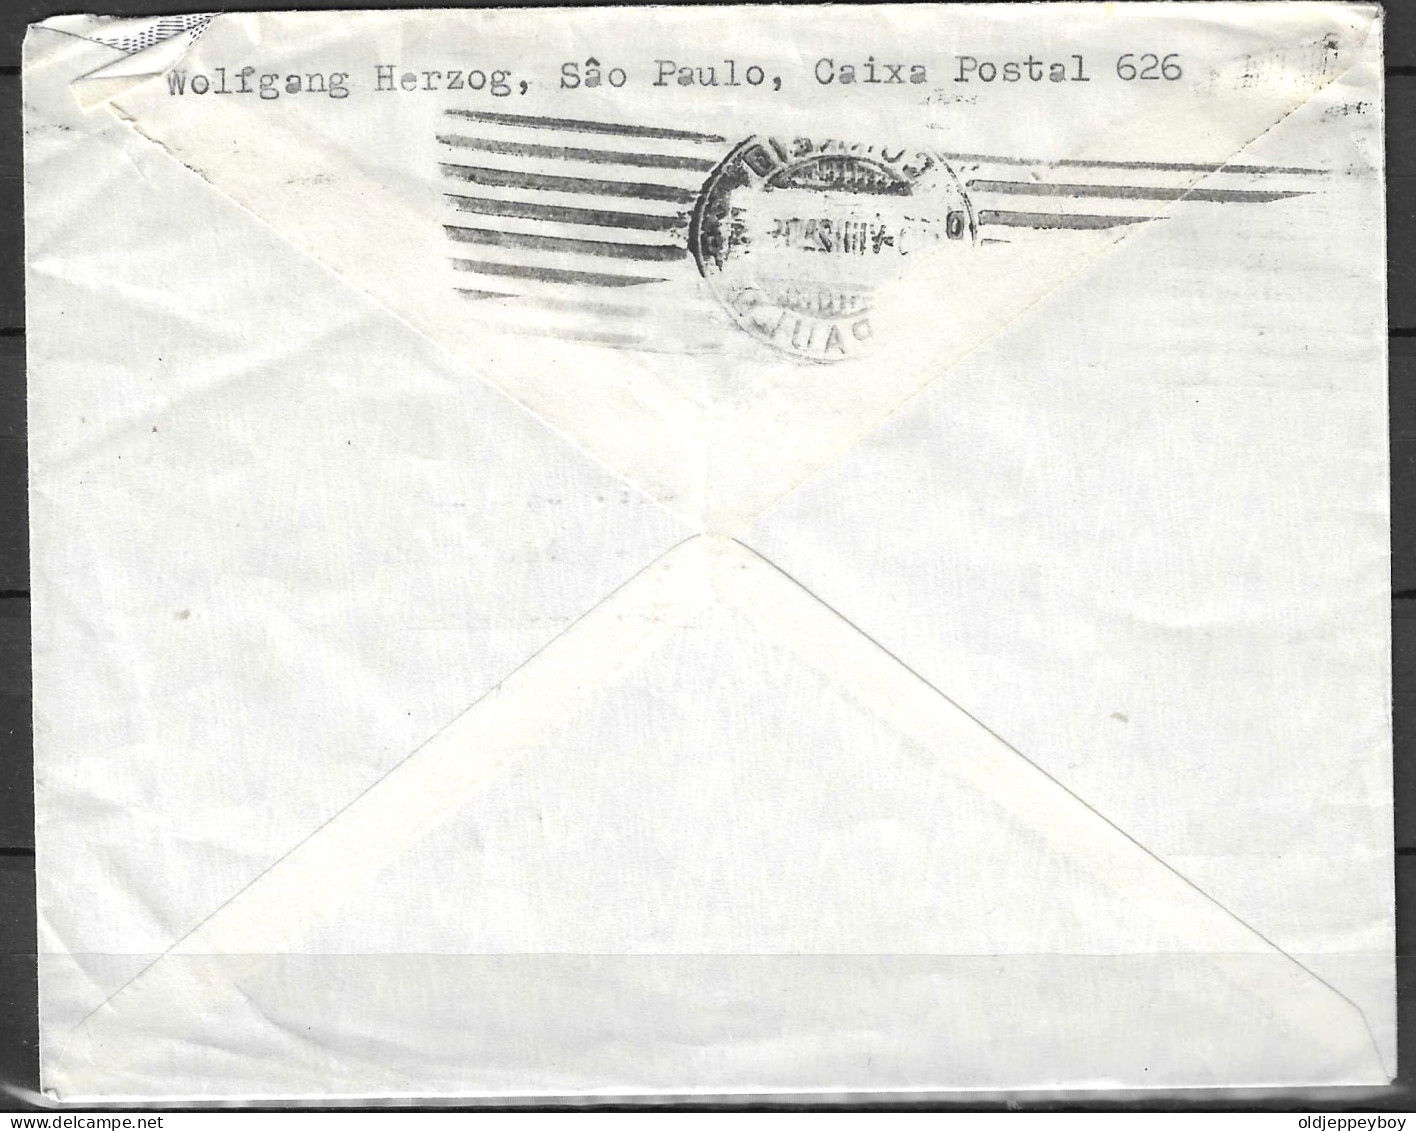 1953  Brazil Brasil Cover Envelope SÃO PAULO VIA AEREA  AIRMAIL  TO KANDERTAL  SUISSE Switzerland JUVENTUDE BATISTA - Lettres & Documents